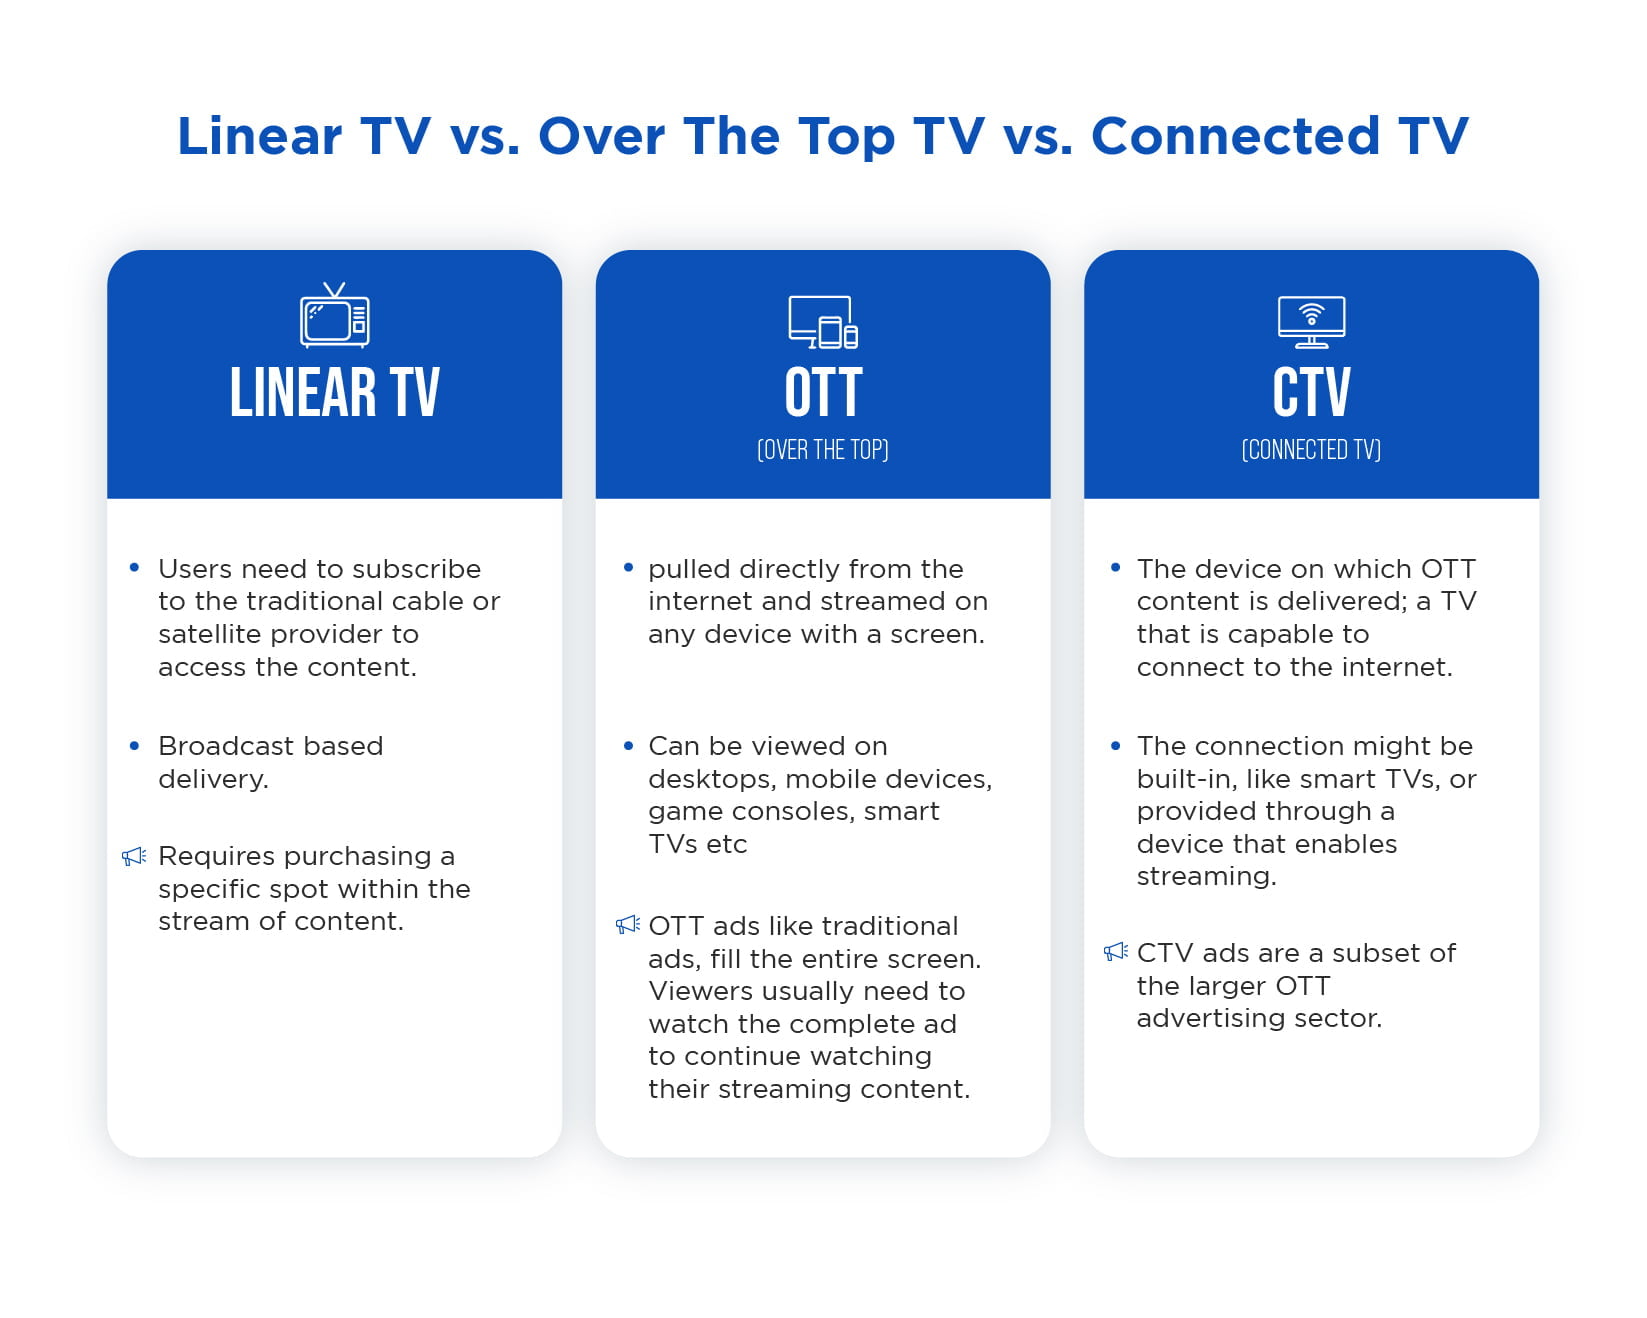 Linear TV vs. Over The Top TV vs. Linear TV